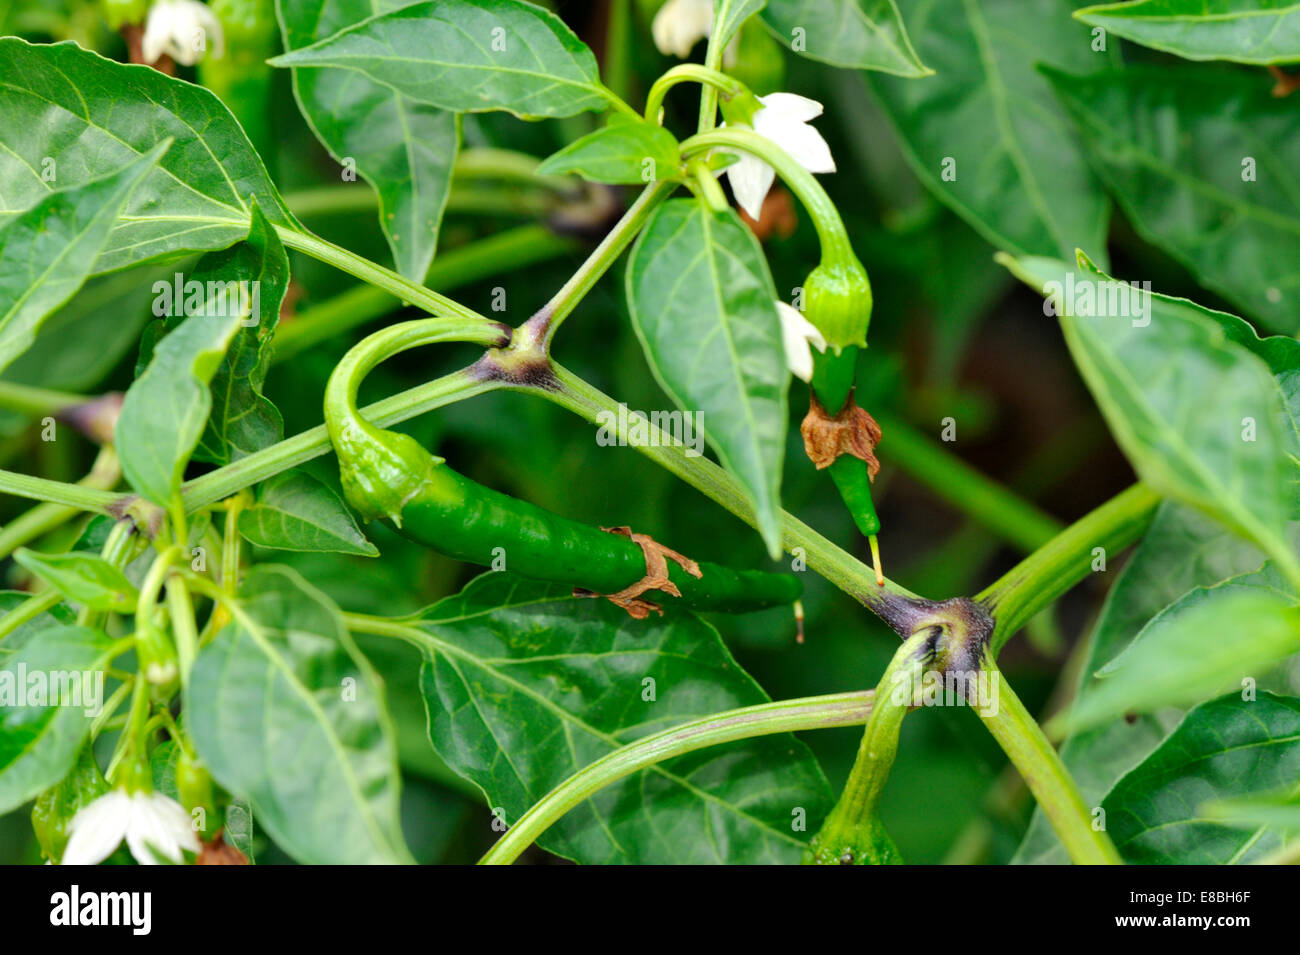 Chilli peppers growing in UK garden Stock Photo